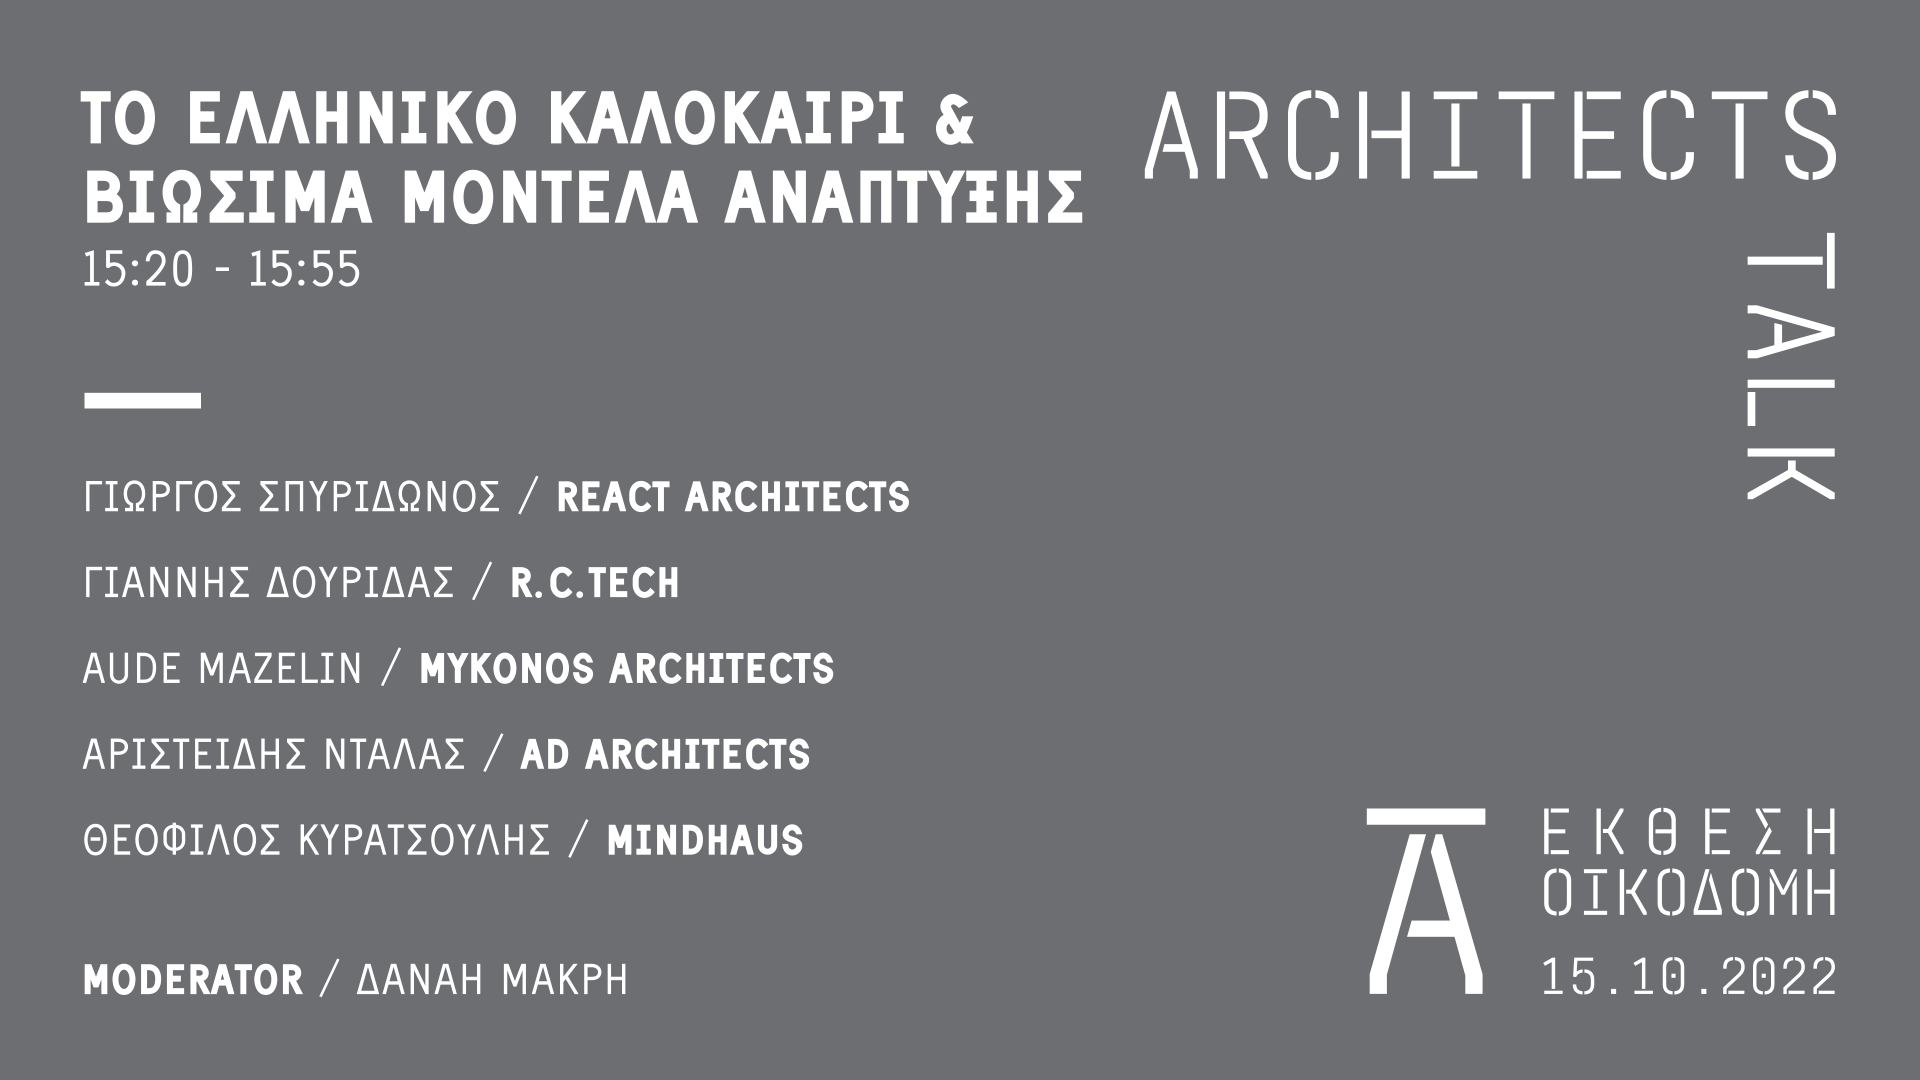 Archisearch Architects Talk 2022 θα πραγματοποιηθεί στις 15 Οκτωβρίου στο Build expo Greece | Curated by the Design Ambassador